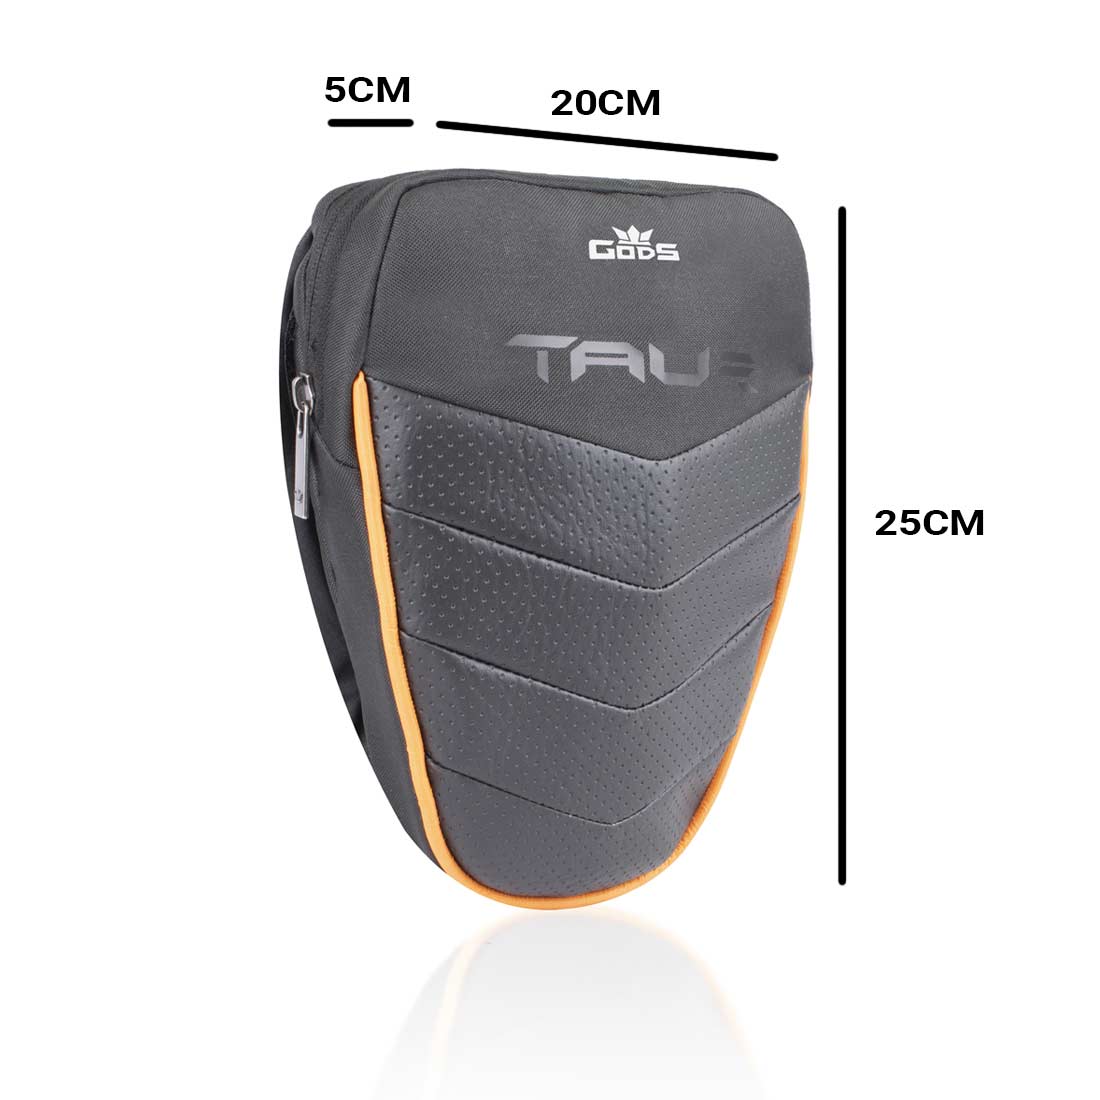 Taur – 4 in 1 Magnetic riding Tank bag, thigh bag, waist bag and Messenger sling bag